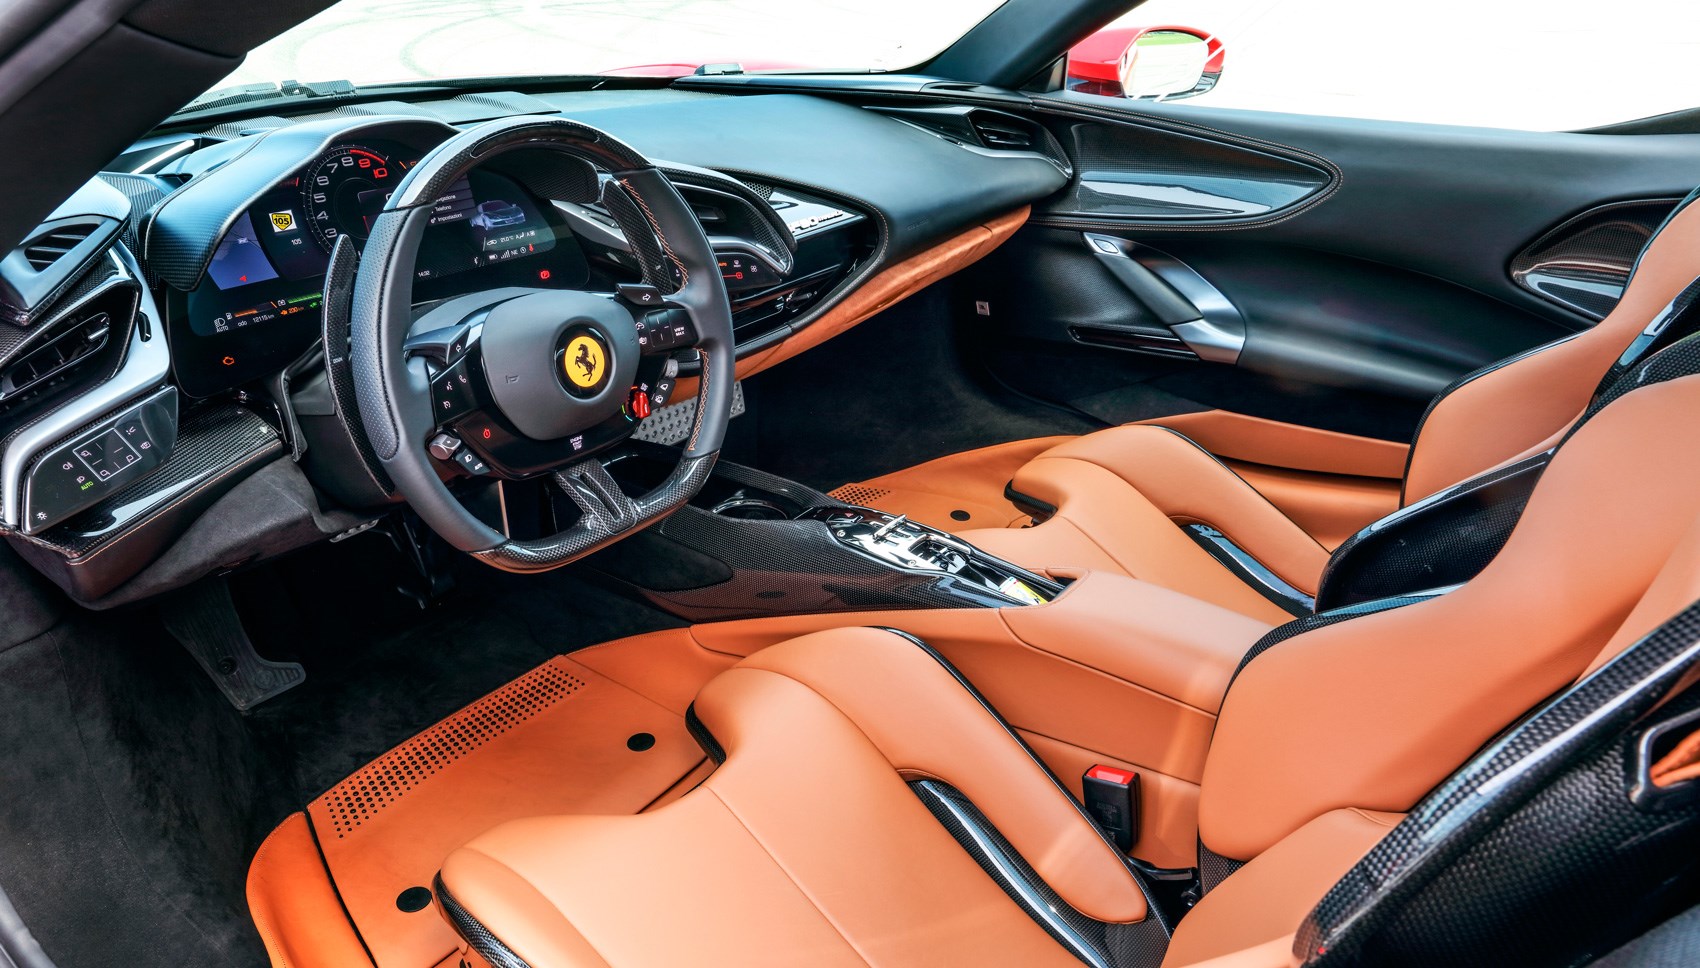 Ferrari Sf90 Stradale 2020 Review An Electrifying Performance Car Magazine